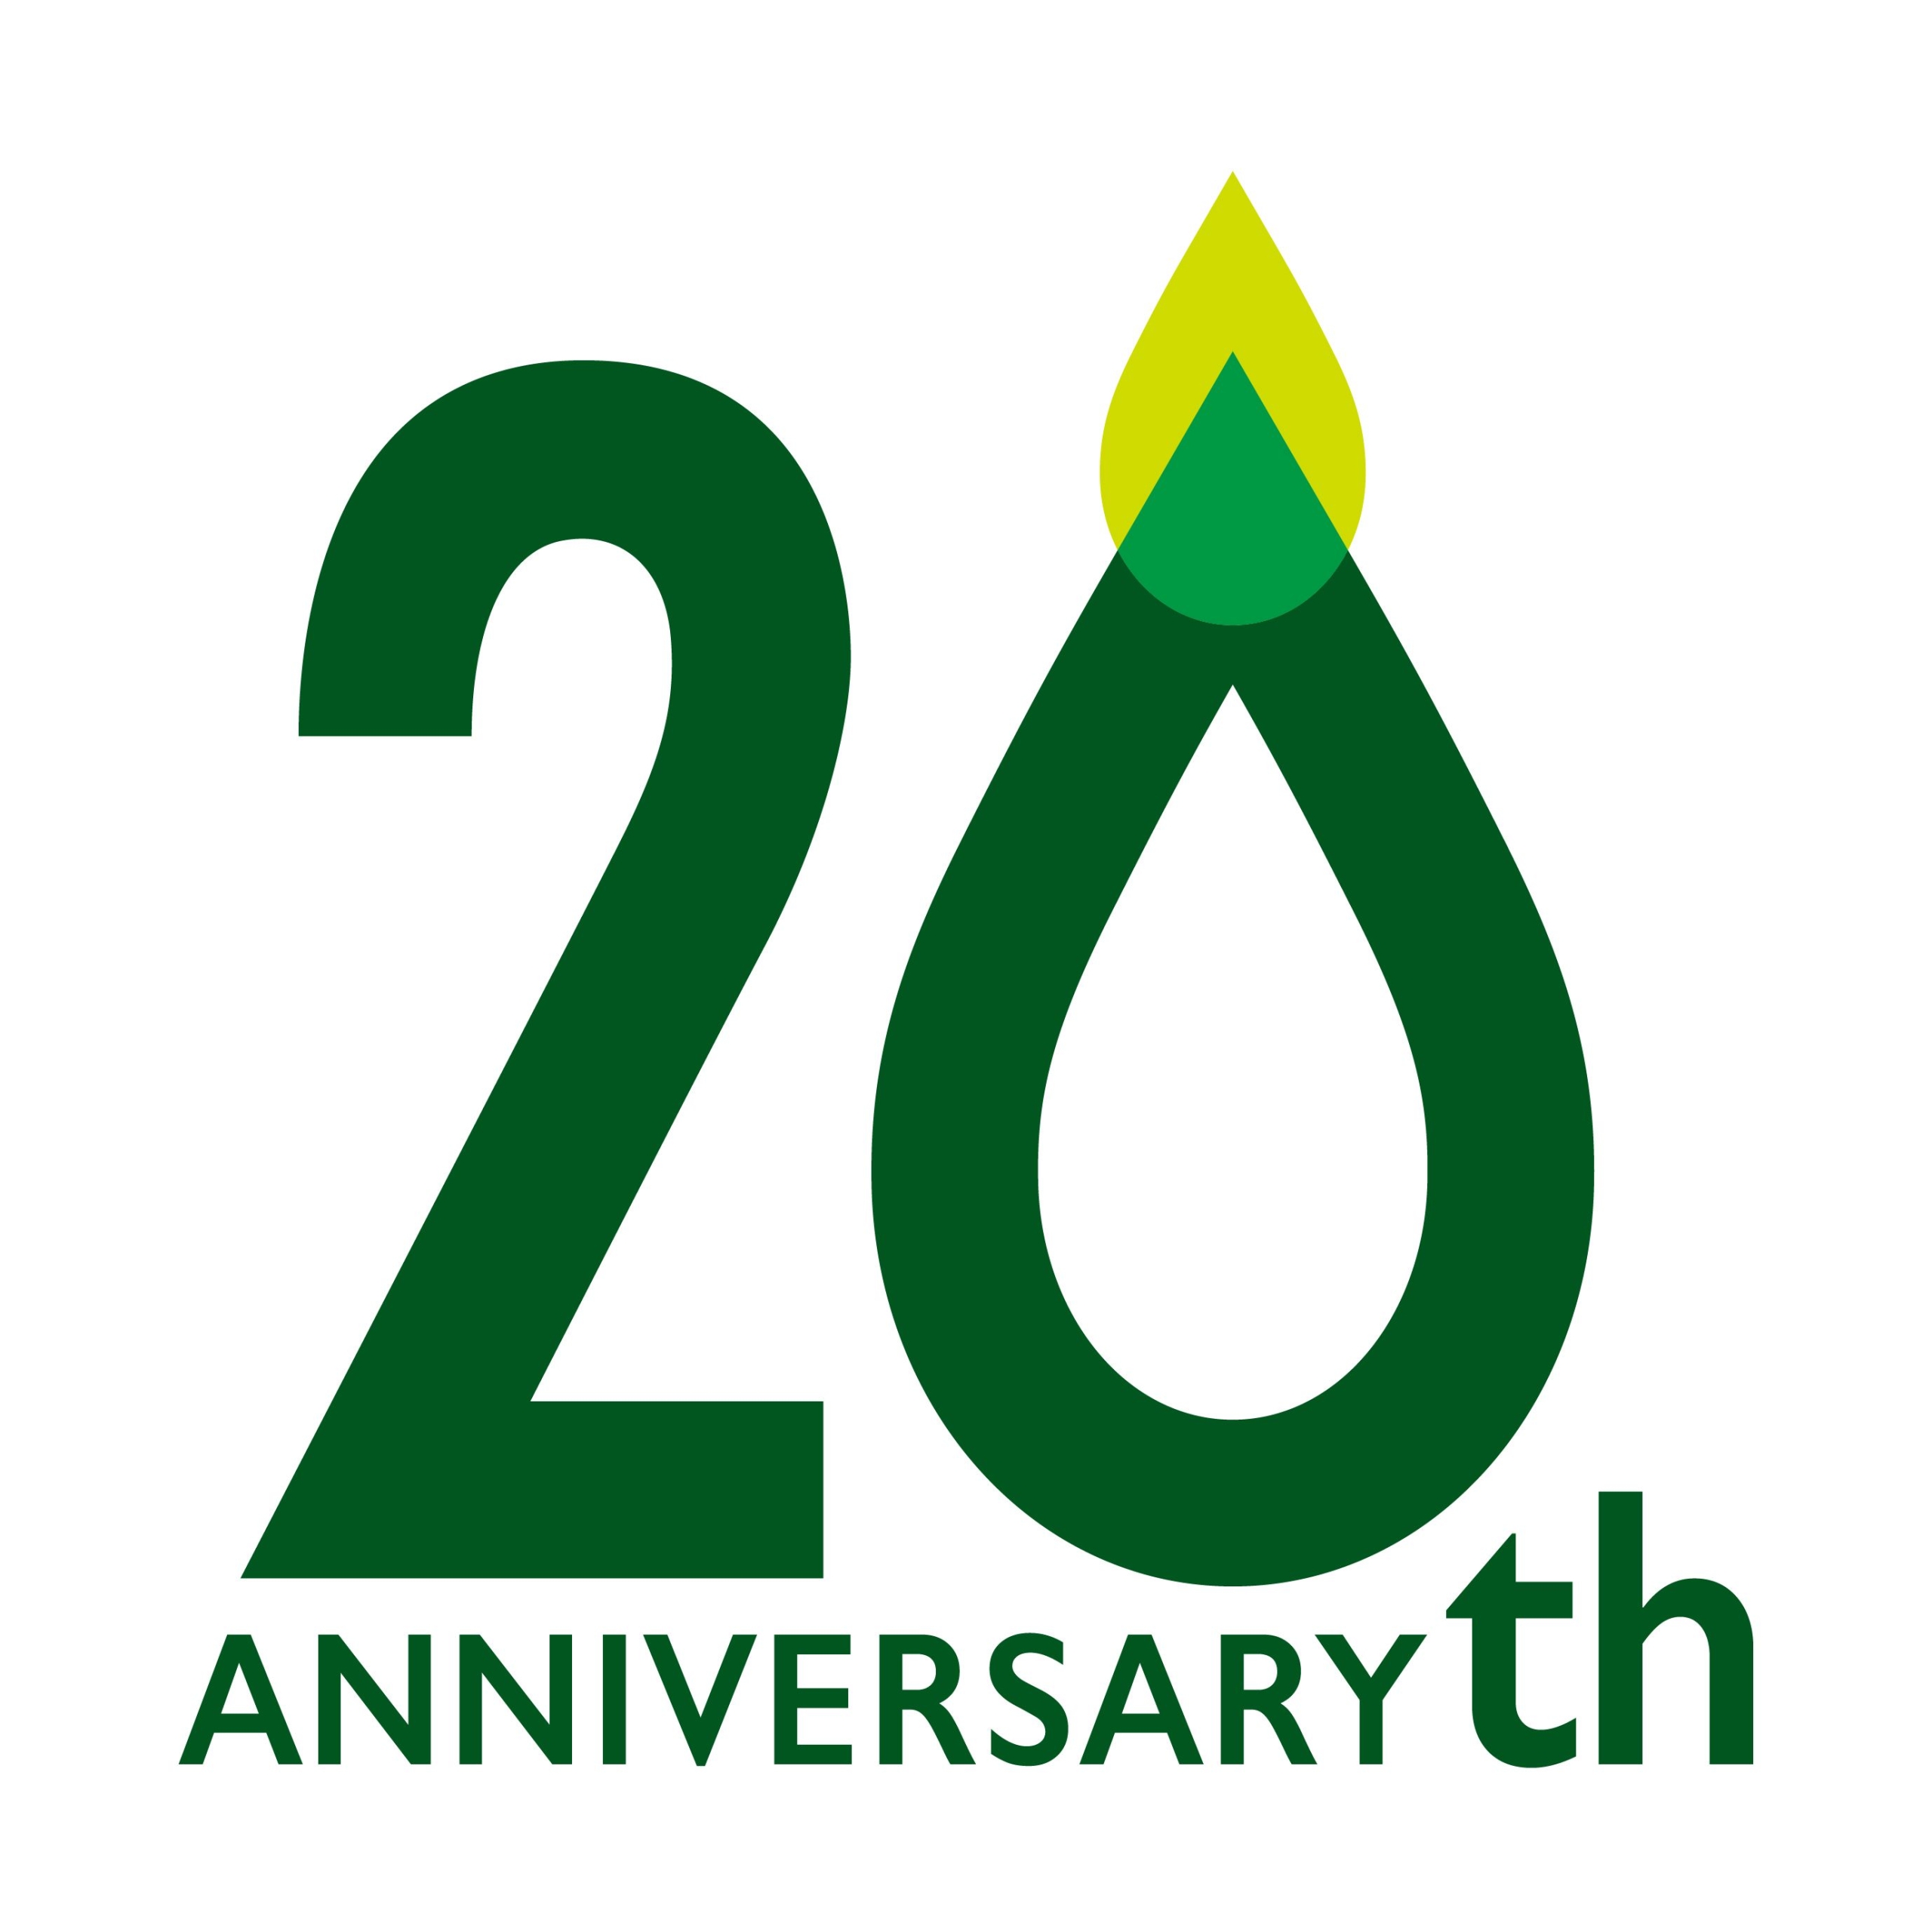 J-オイルミルズ創立20周年、記念ロゴ